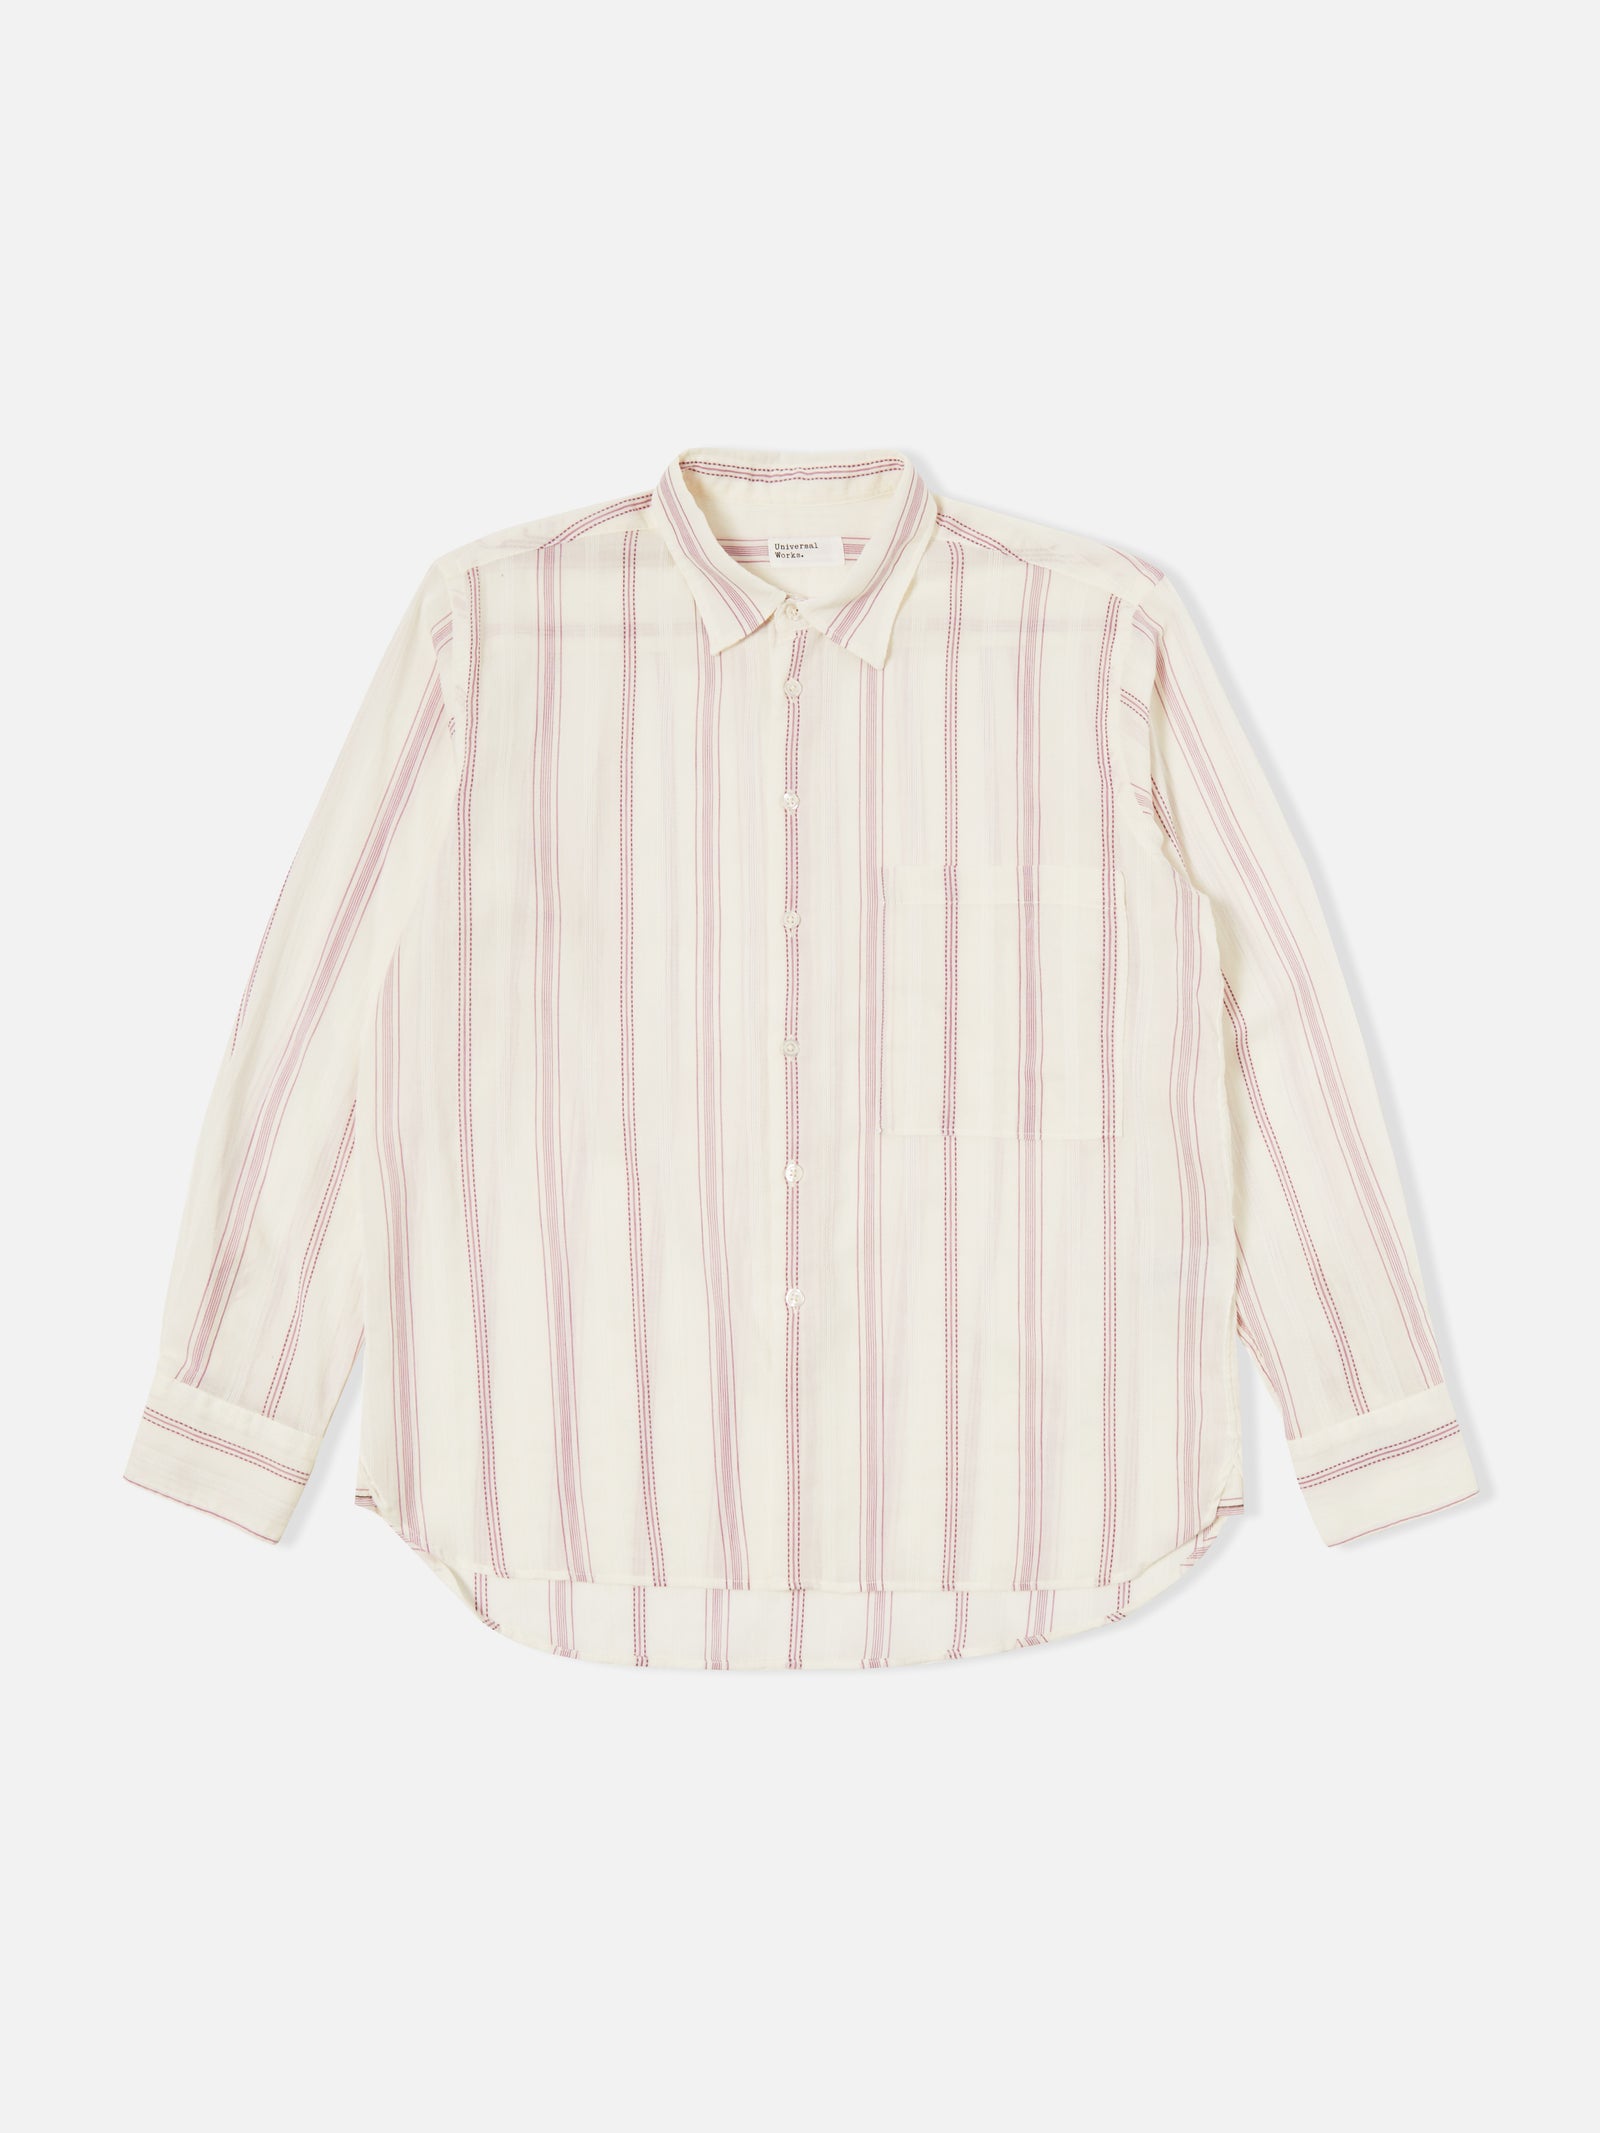 Universal Works Square Pocket Shirt in Ecru/Lilac Hendrix Curry Stripe